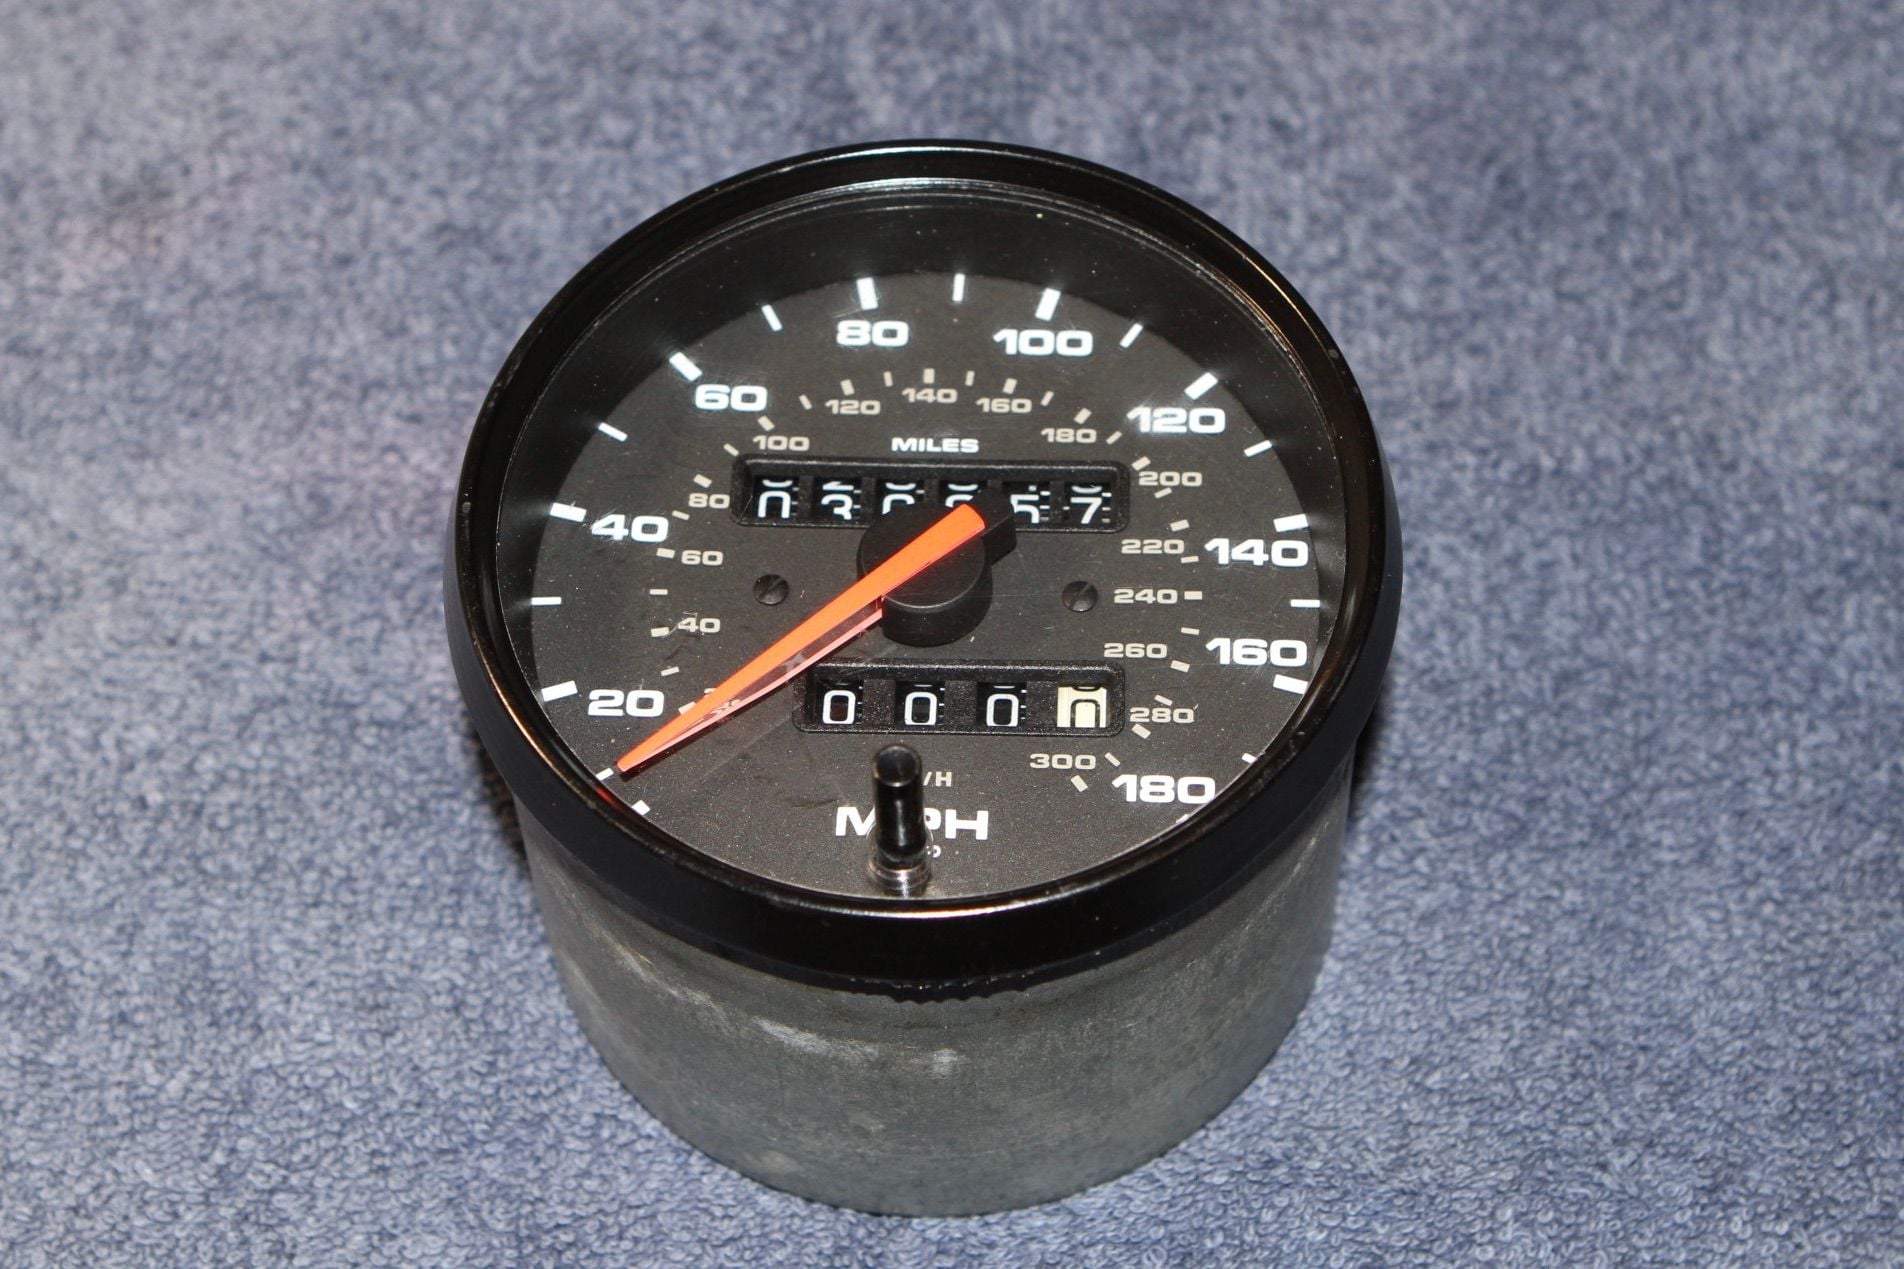 Interior/Upholstery - Speedometer 964/993 - Used - 1989 to 1998 Porsche 911 - Cheyenne, WY 82009, United States